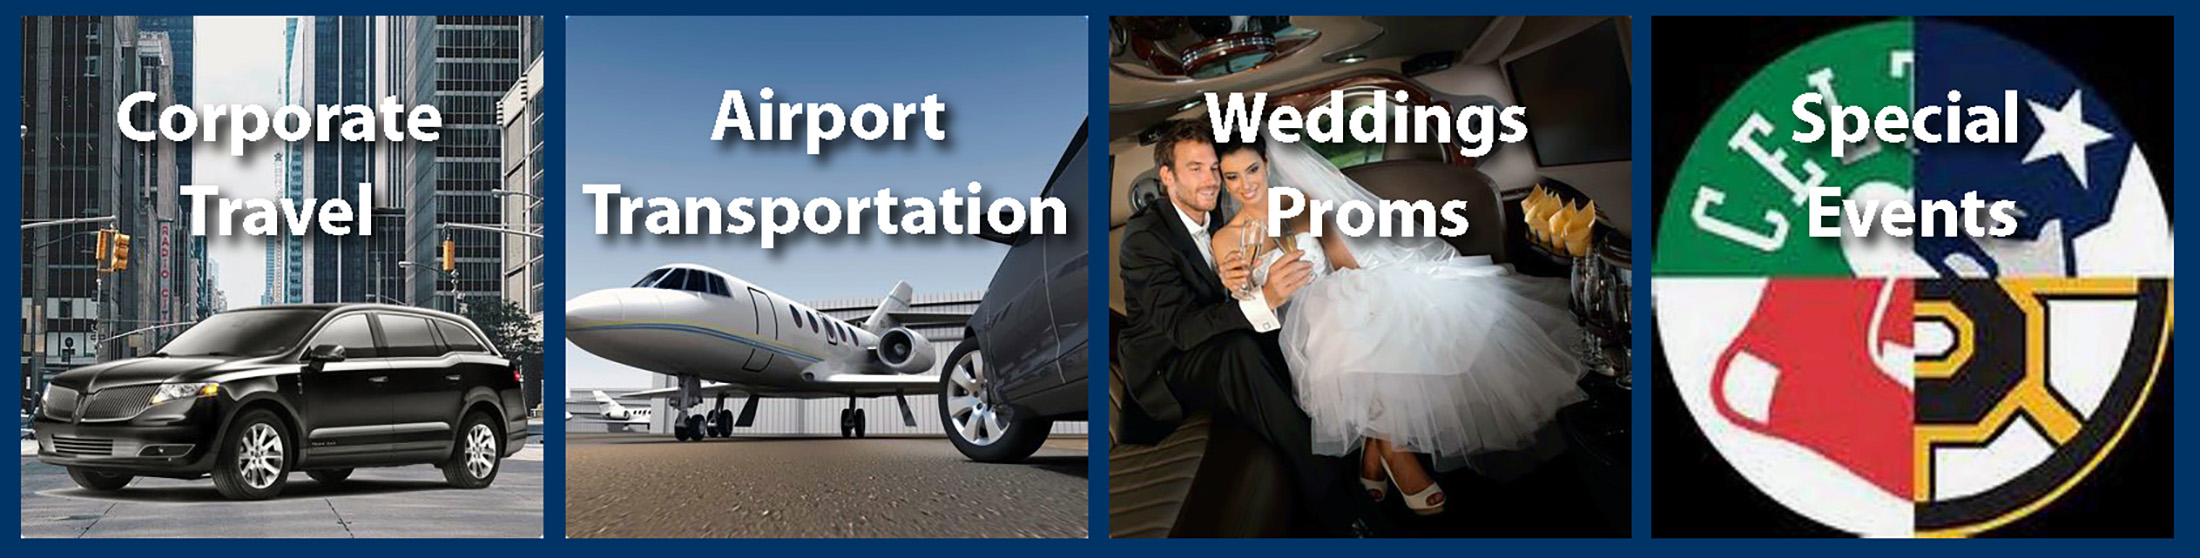 Above All Transportation-4Up-CorporateTravel-AirportTransportation-WeddingsProms-SportingEvents-Concerrts